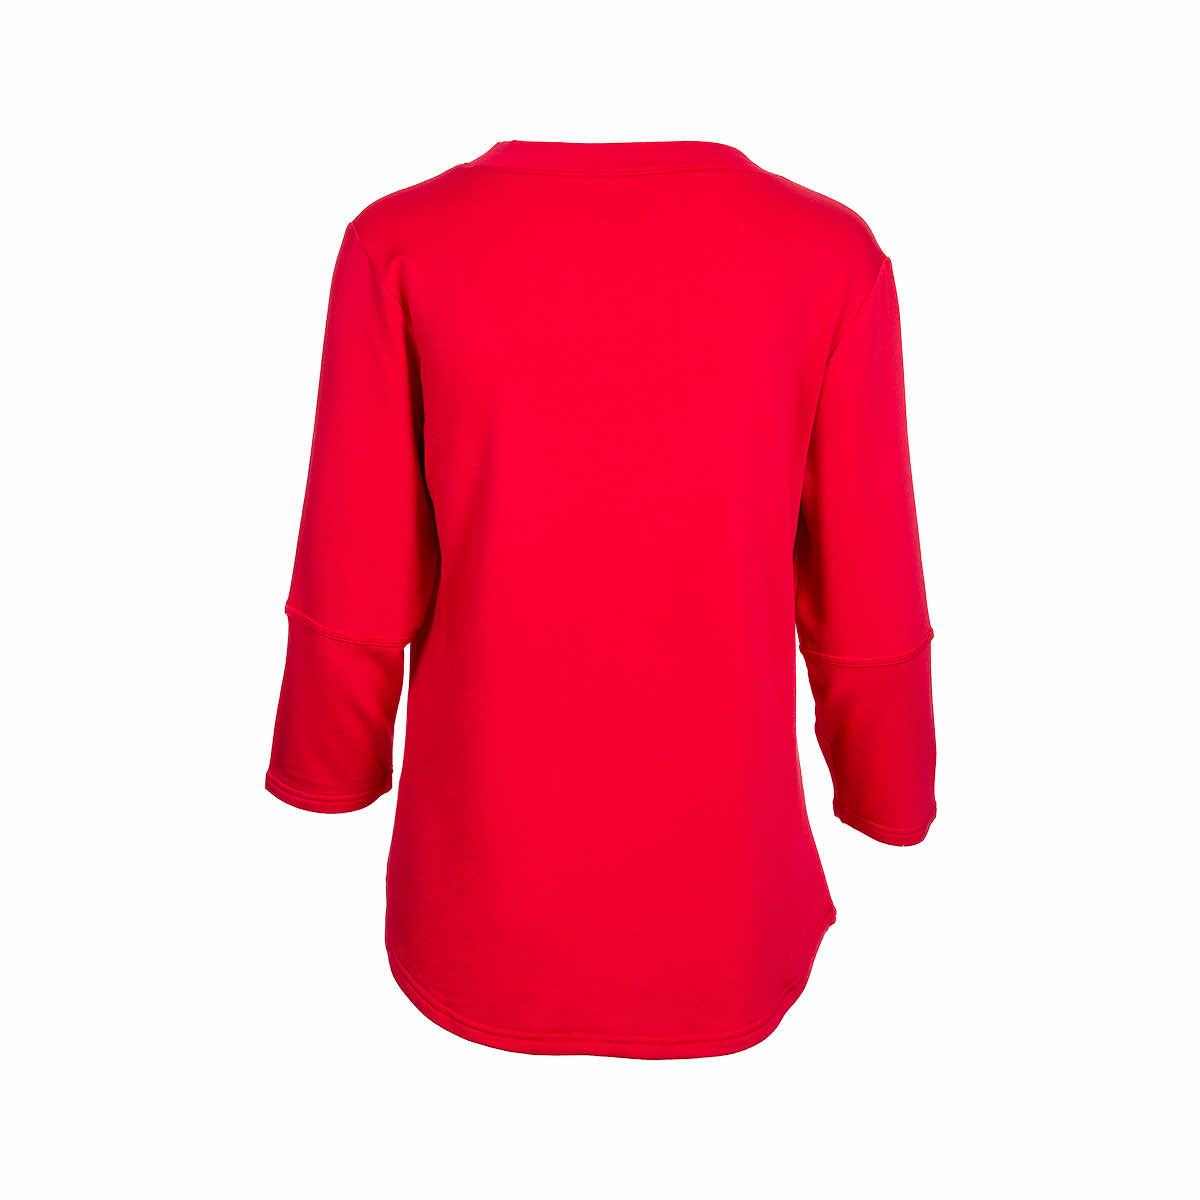 Mast General Store | Women's Super Soft V-Neck Sweater